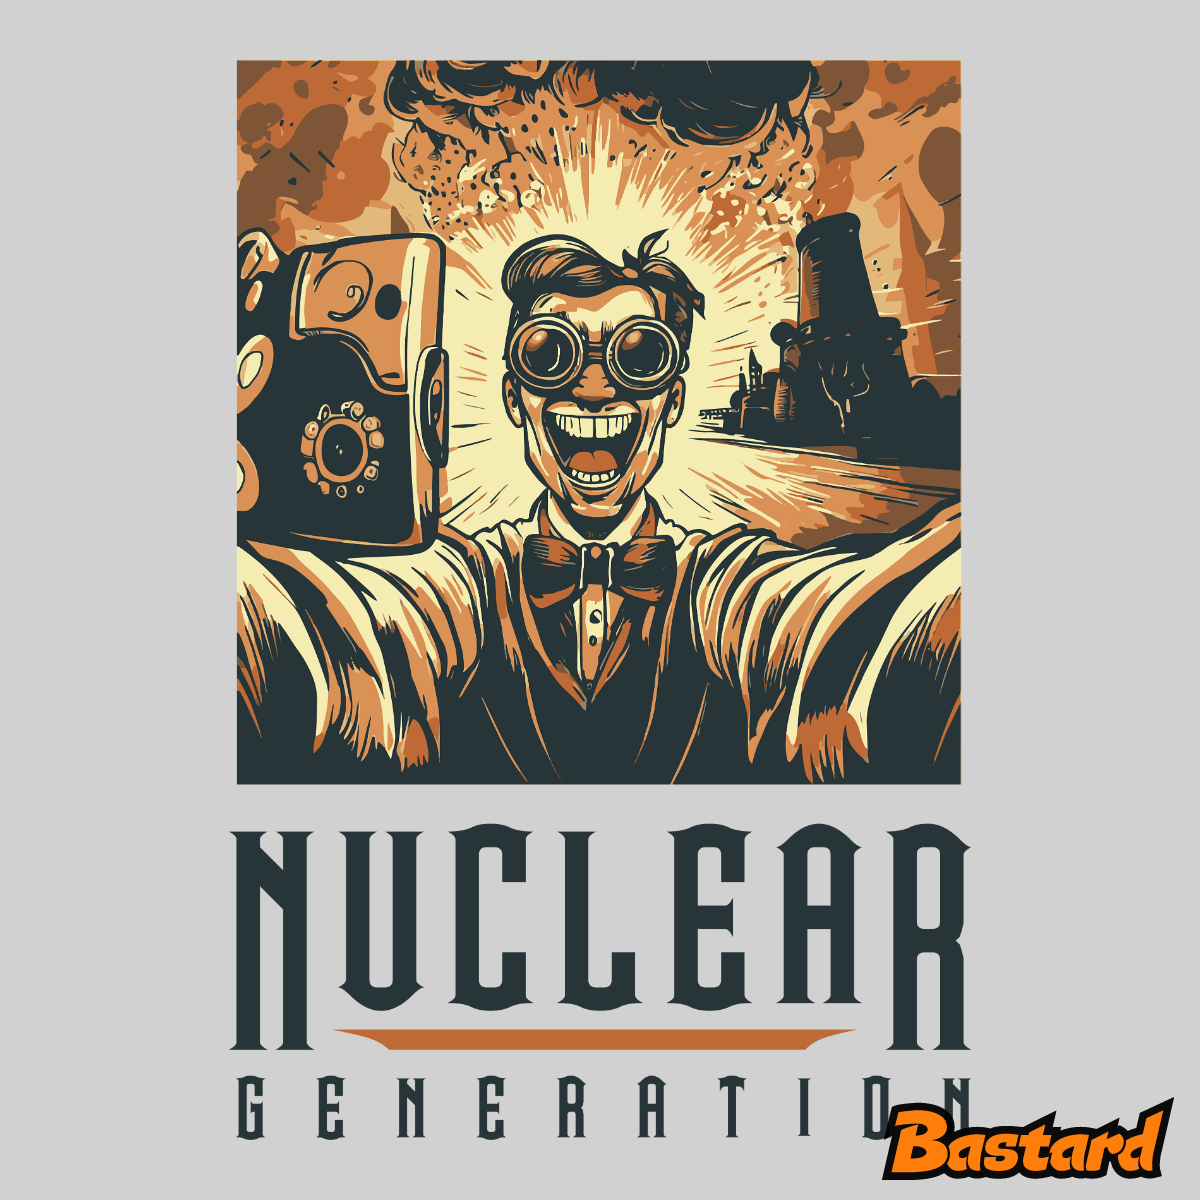 Nuclear generation